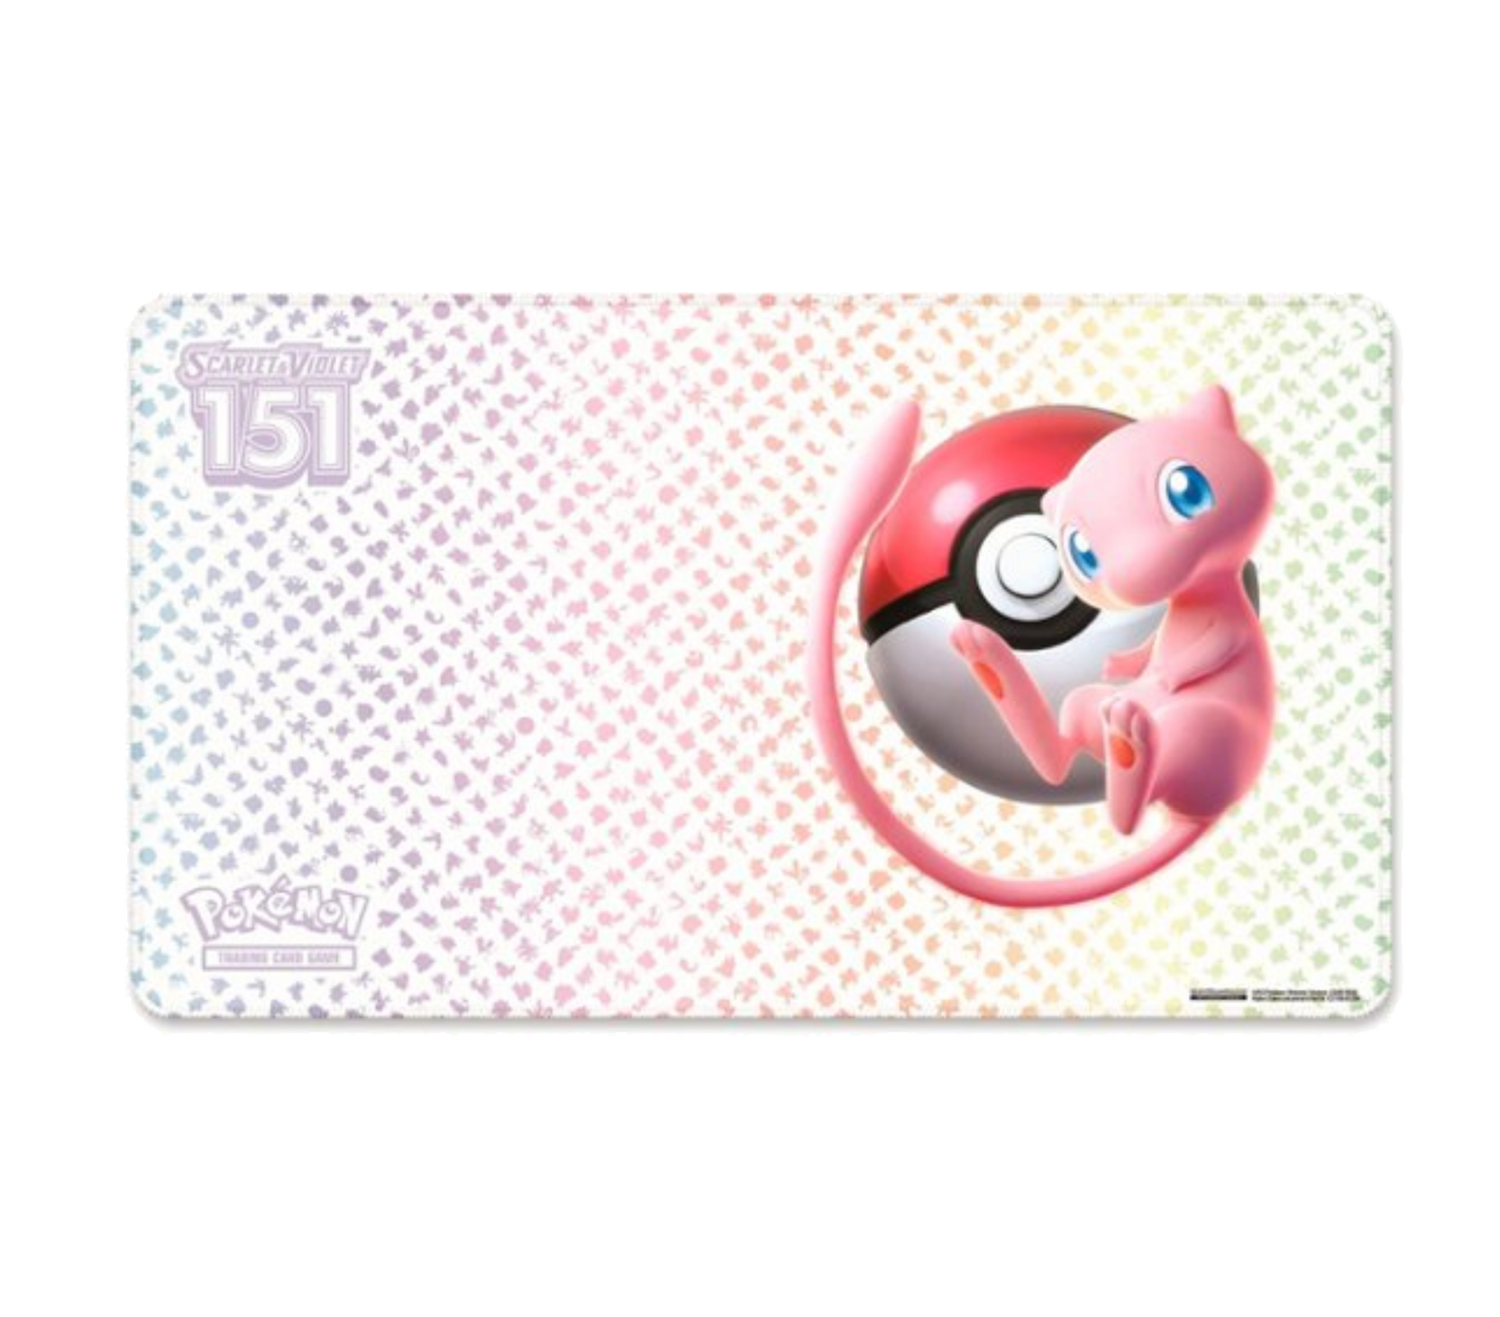 Pokémon: Scarlet & Violet 151 Booster Bundle – CARDIACS Sports & Memorabilia